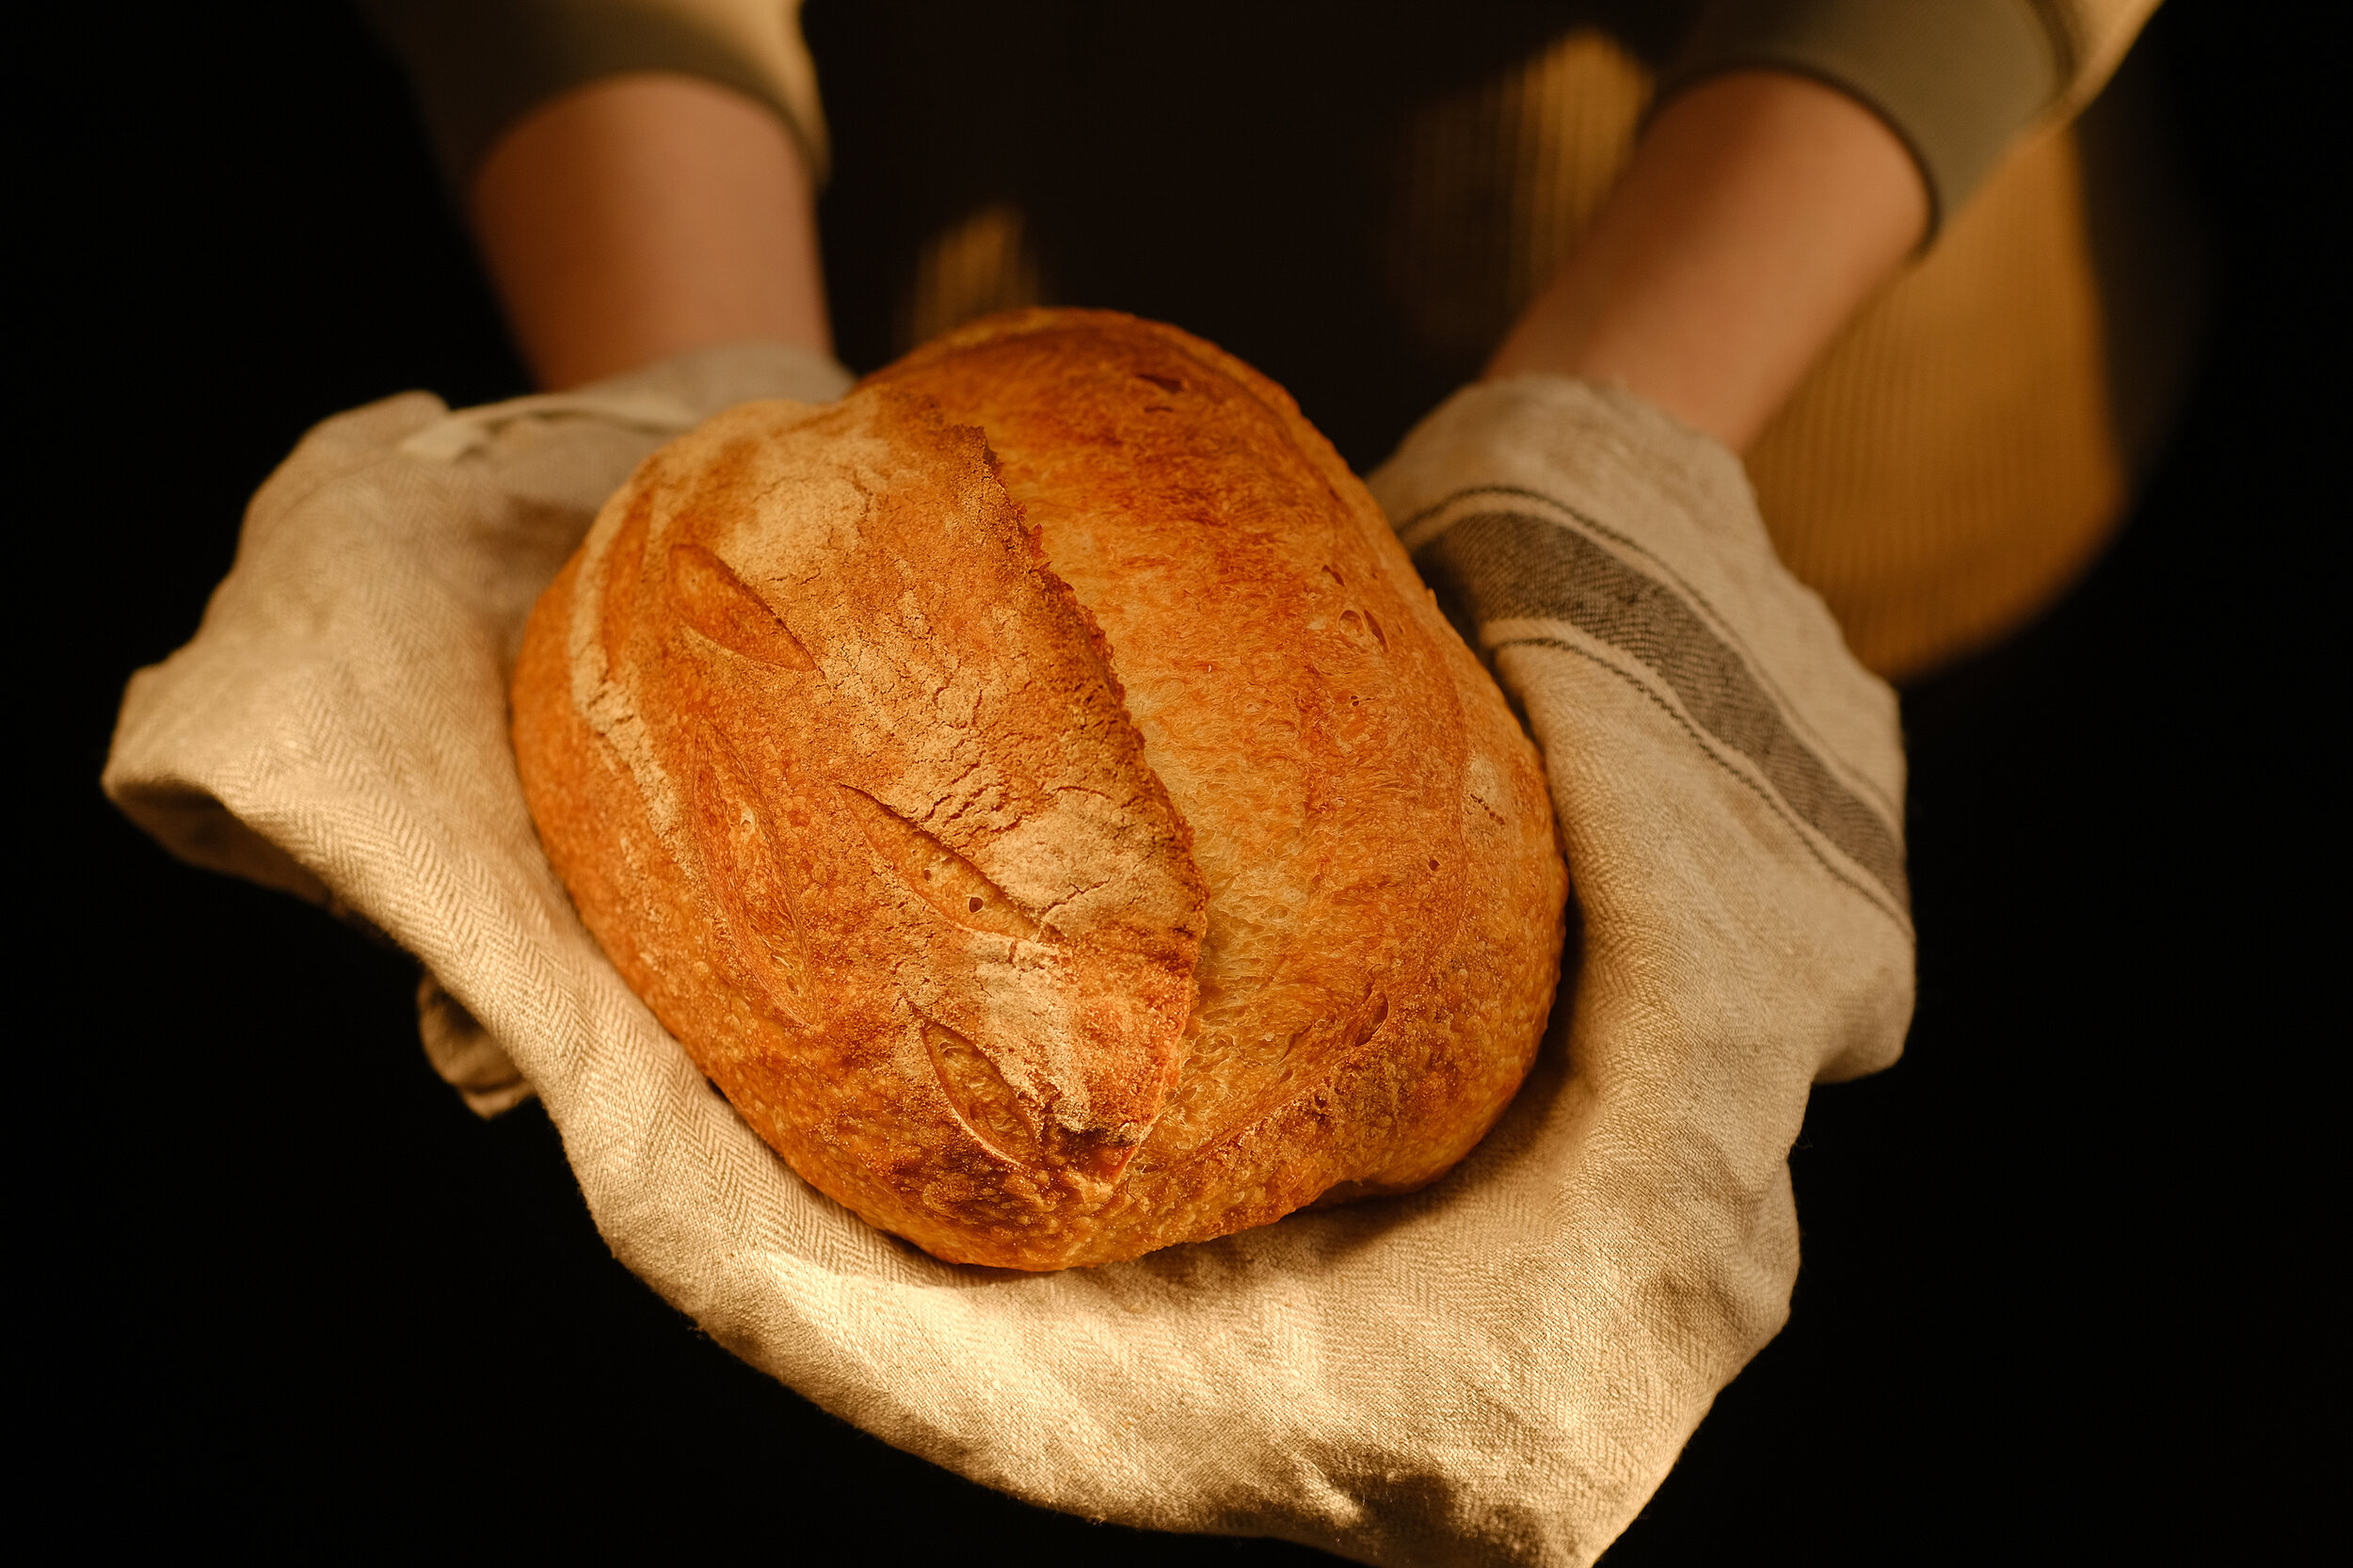 bigstock-Woman-Holding-Loaf-Of-Bread-B-351746213.jpg